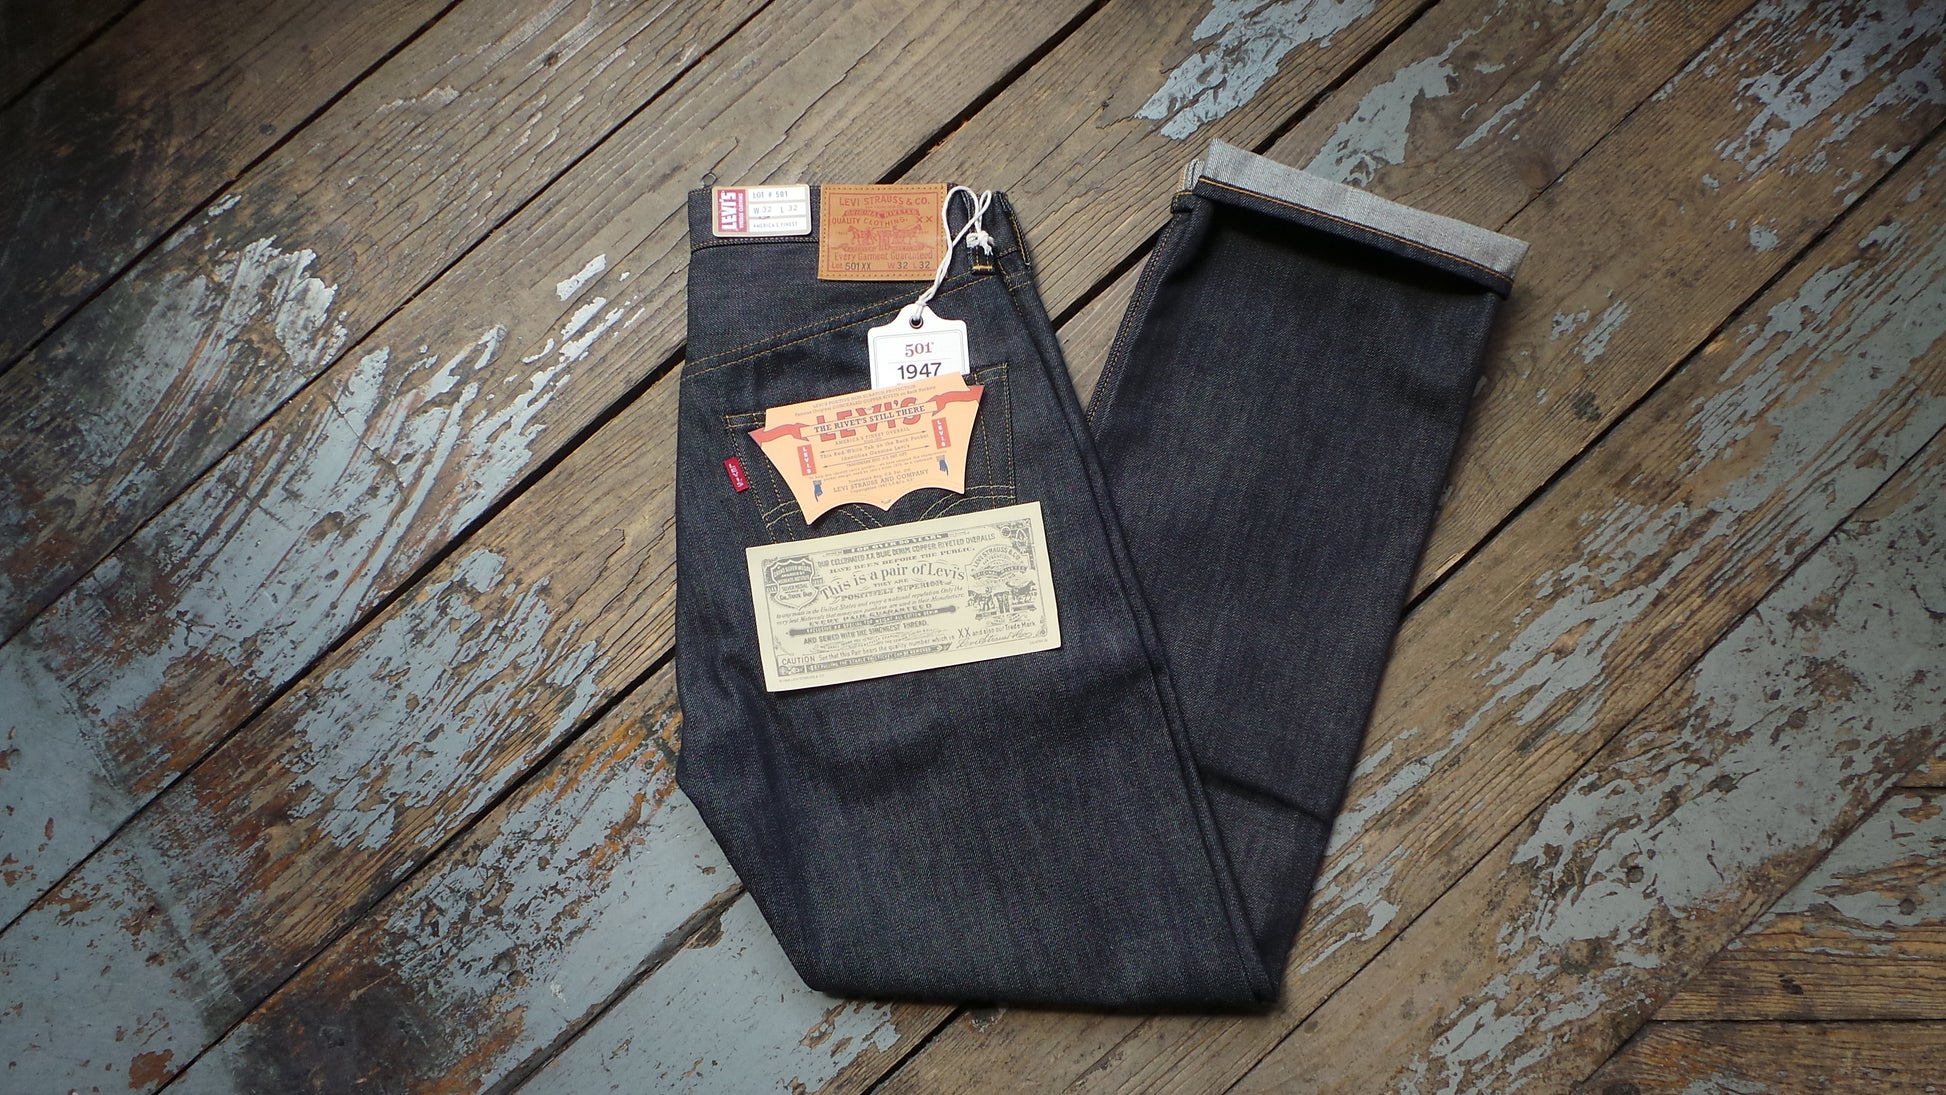 1947 501® Original Fit Selvedge Men's Jeans - Dark Wash